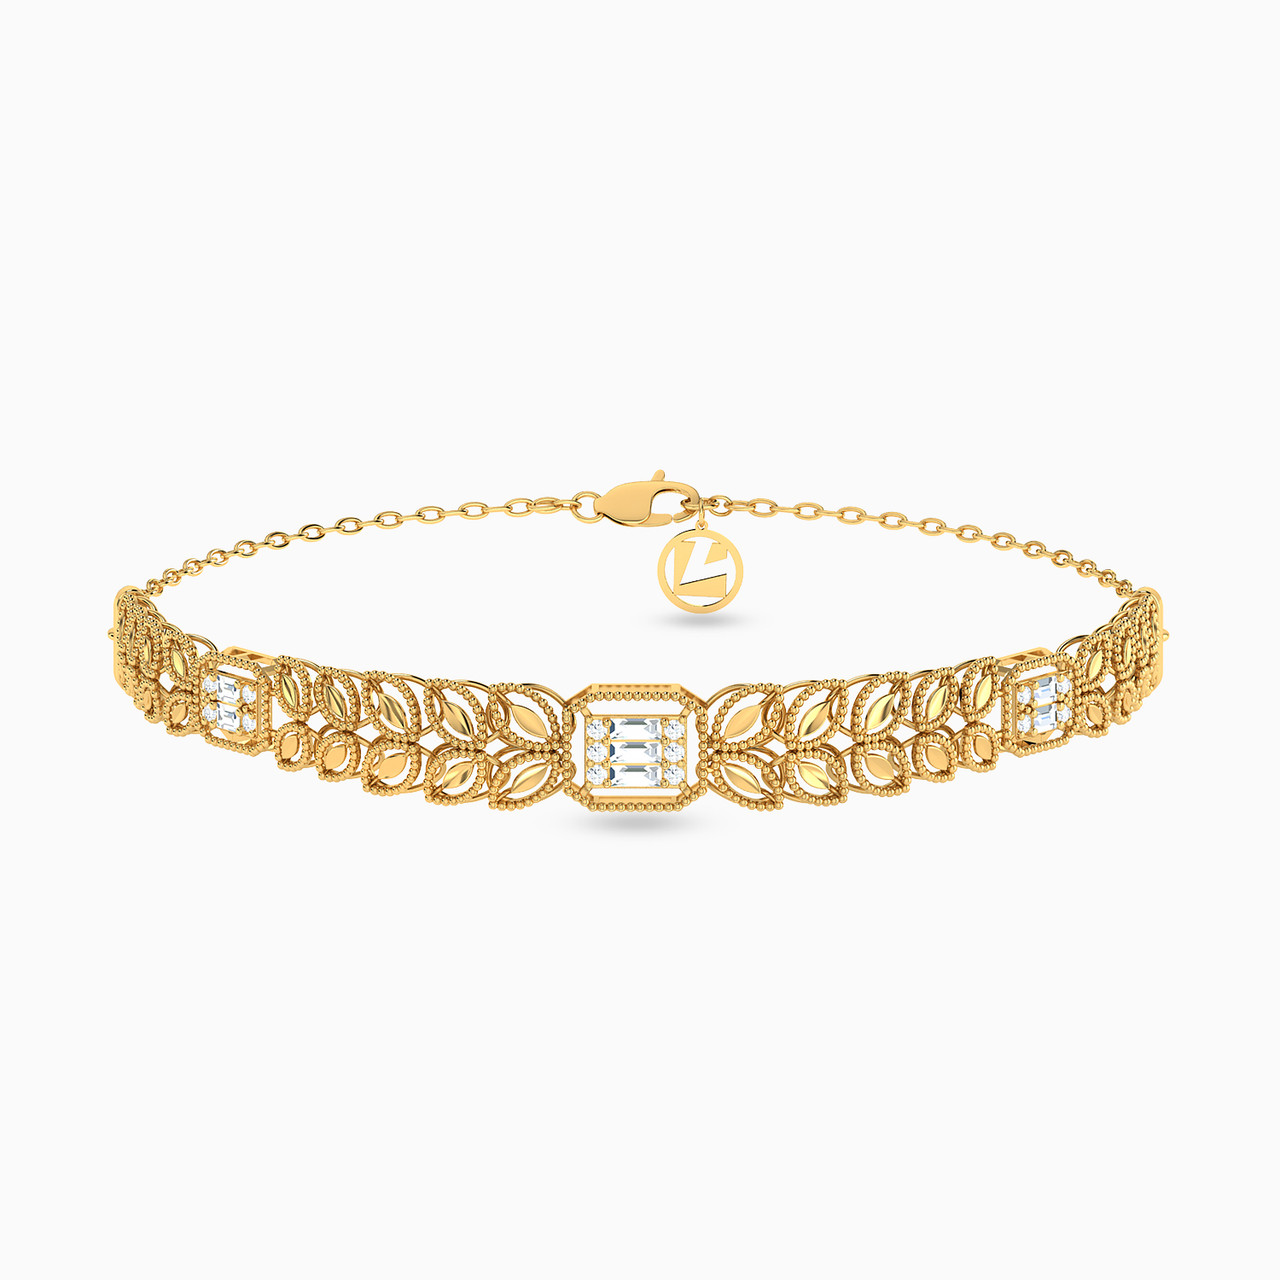 21k Saudi Gold Jewelry for Sale - Tina's Jewelries | TikTok